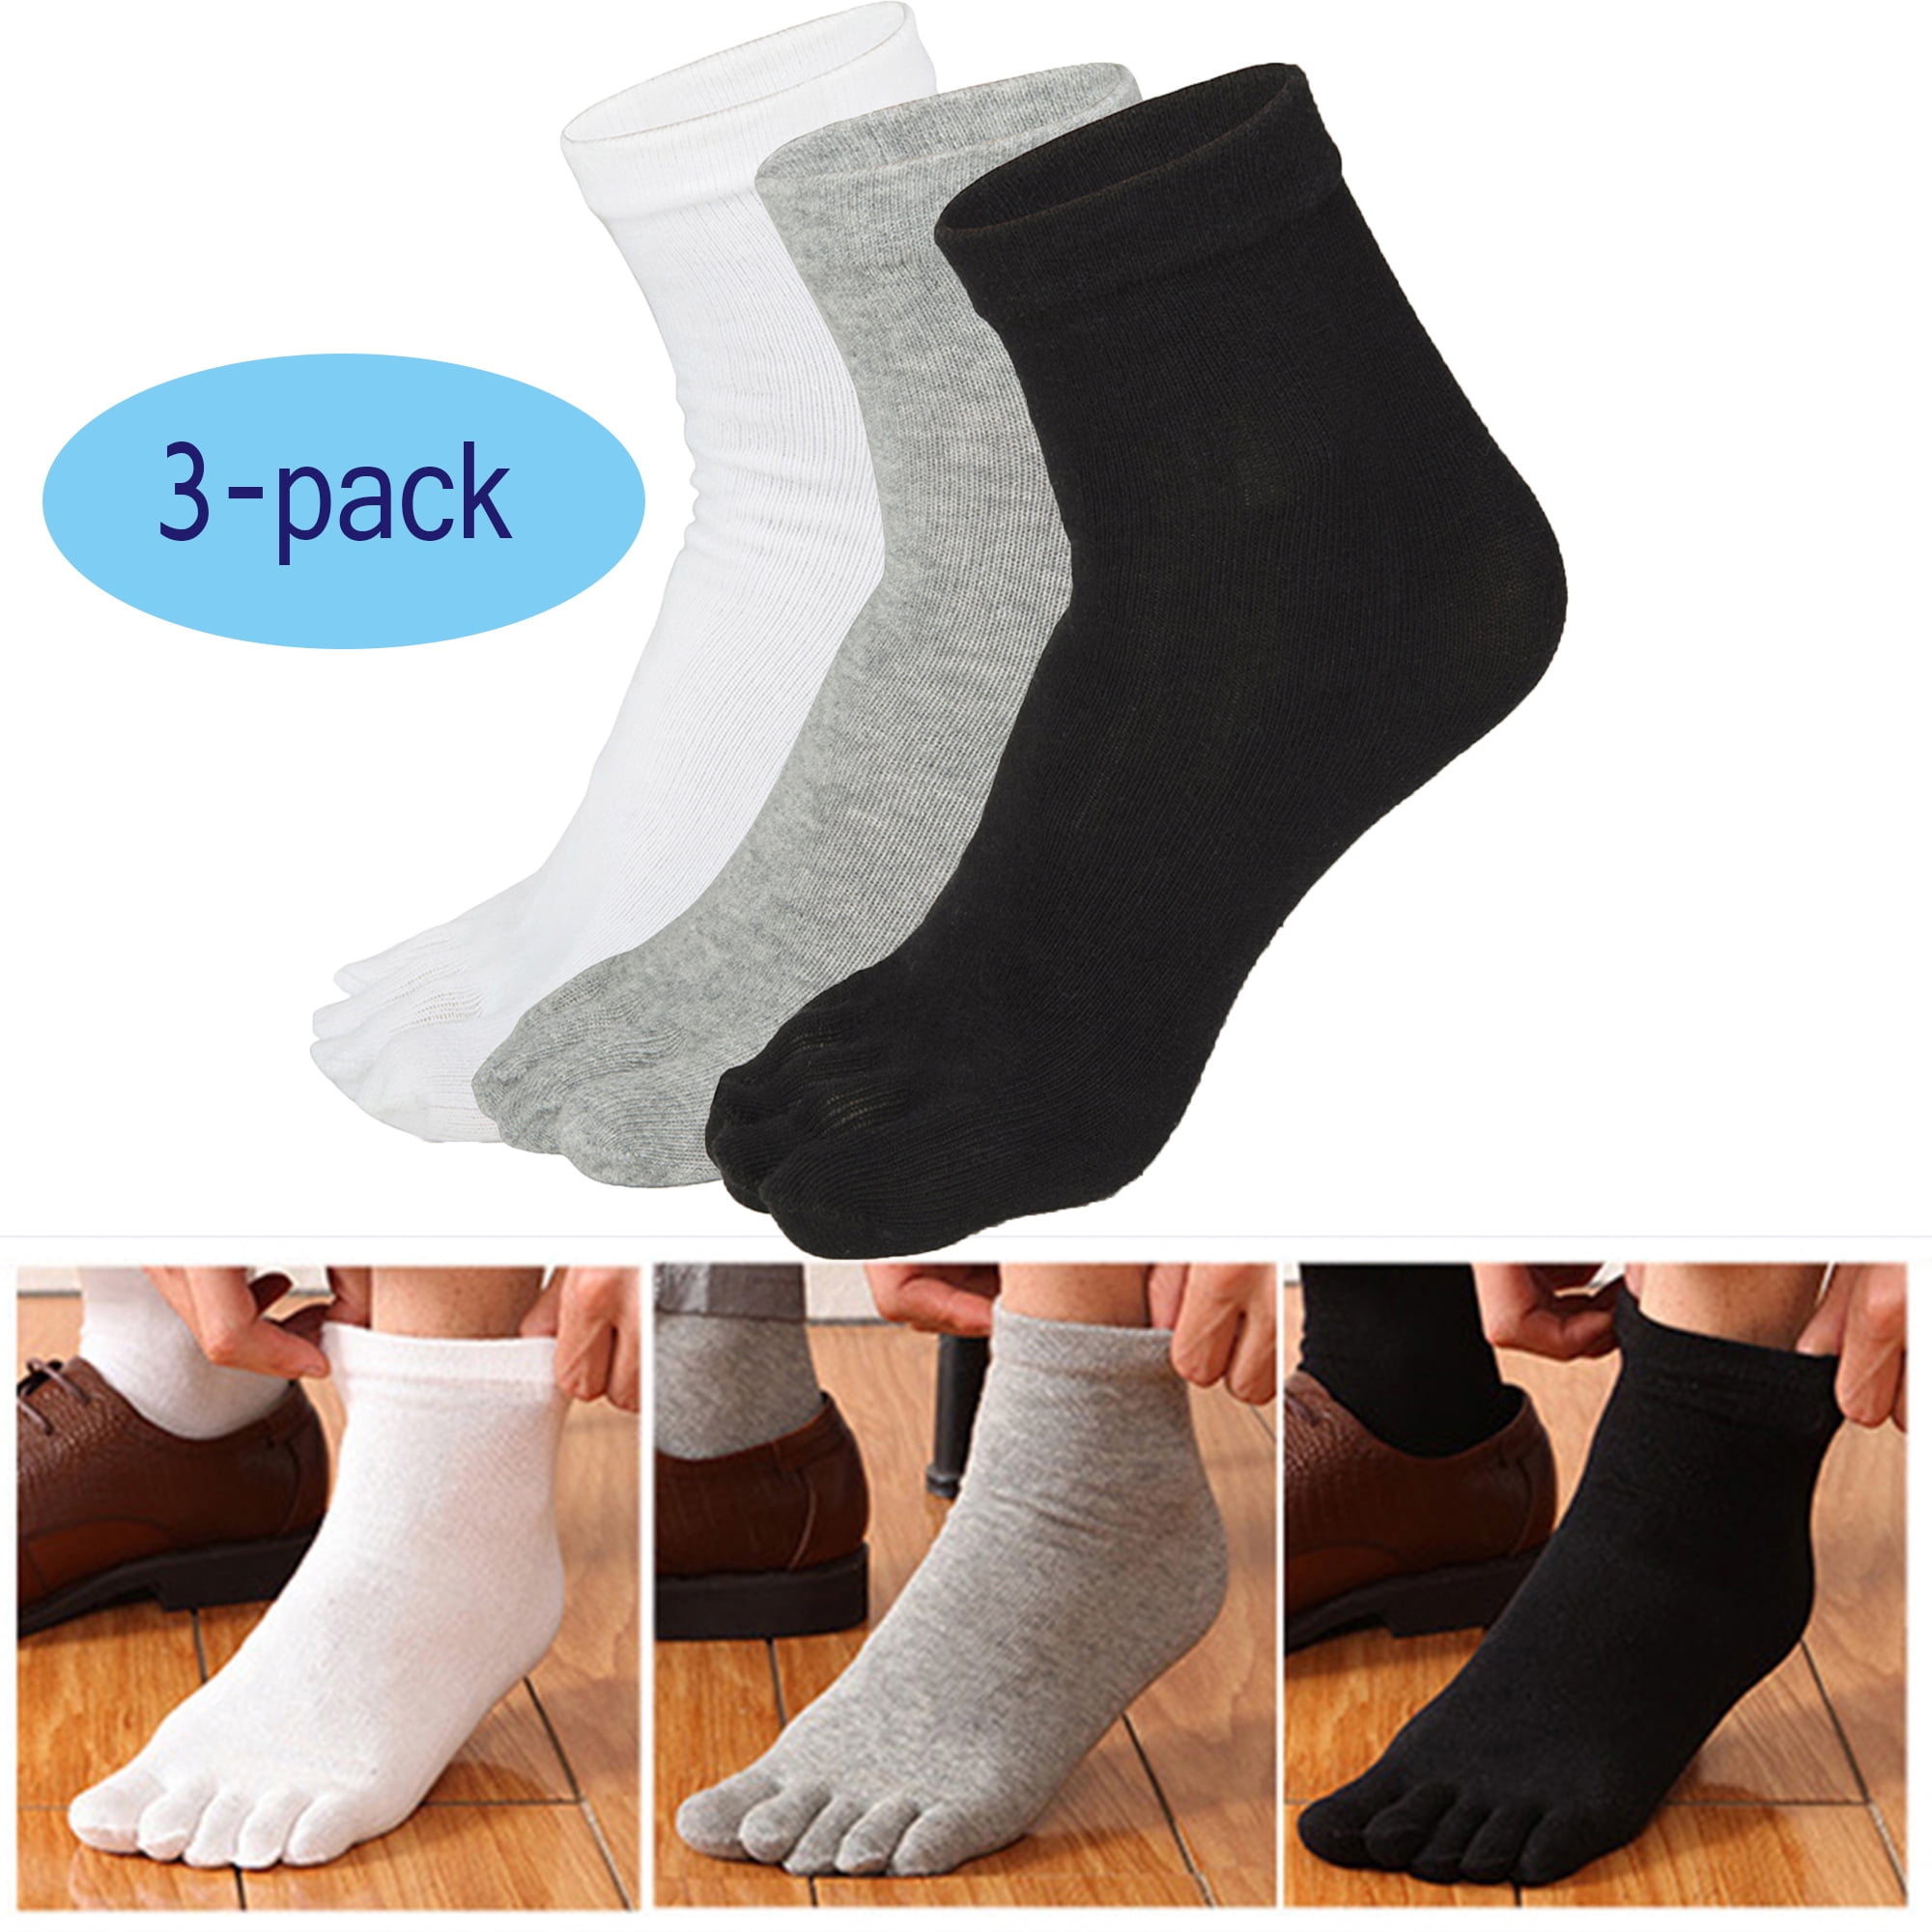 Five Toe Socks Online - Buy @Best Price